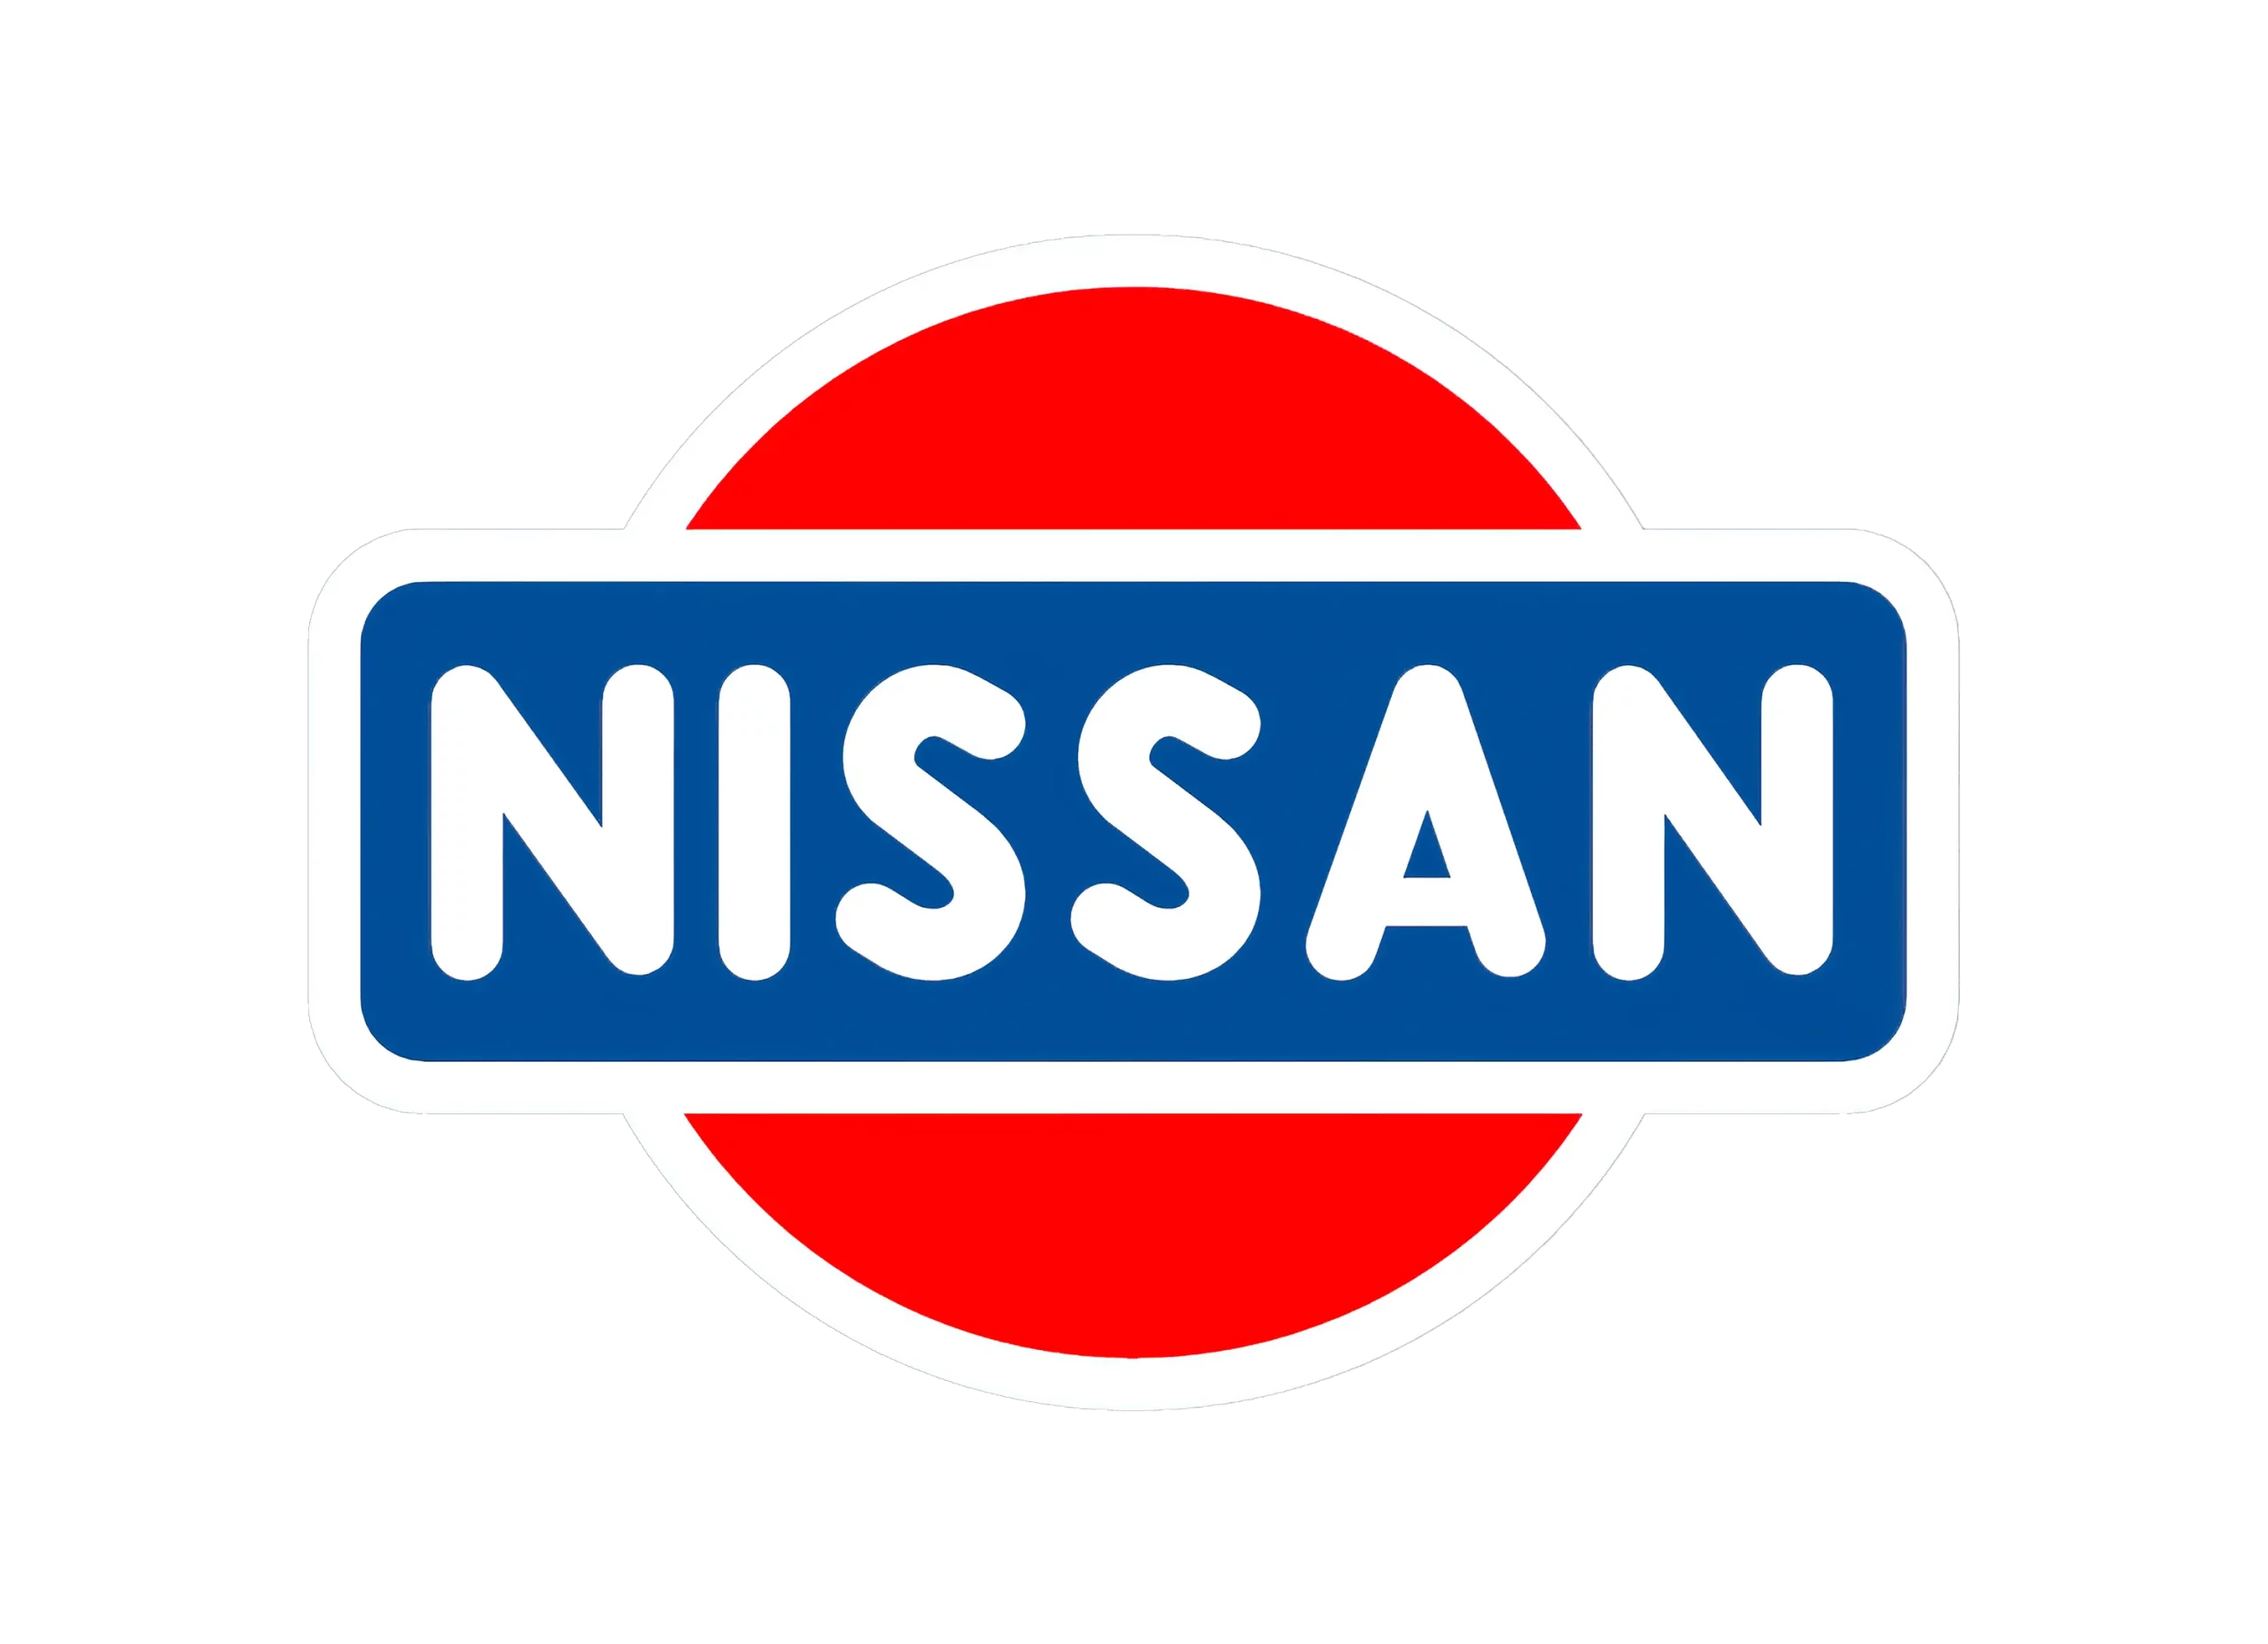 Nissan logo 1933-1940